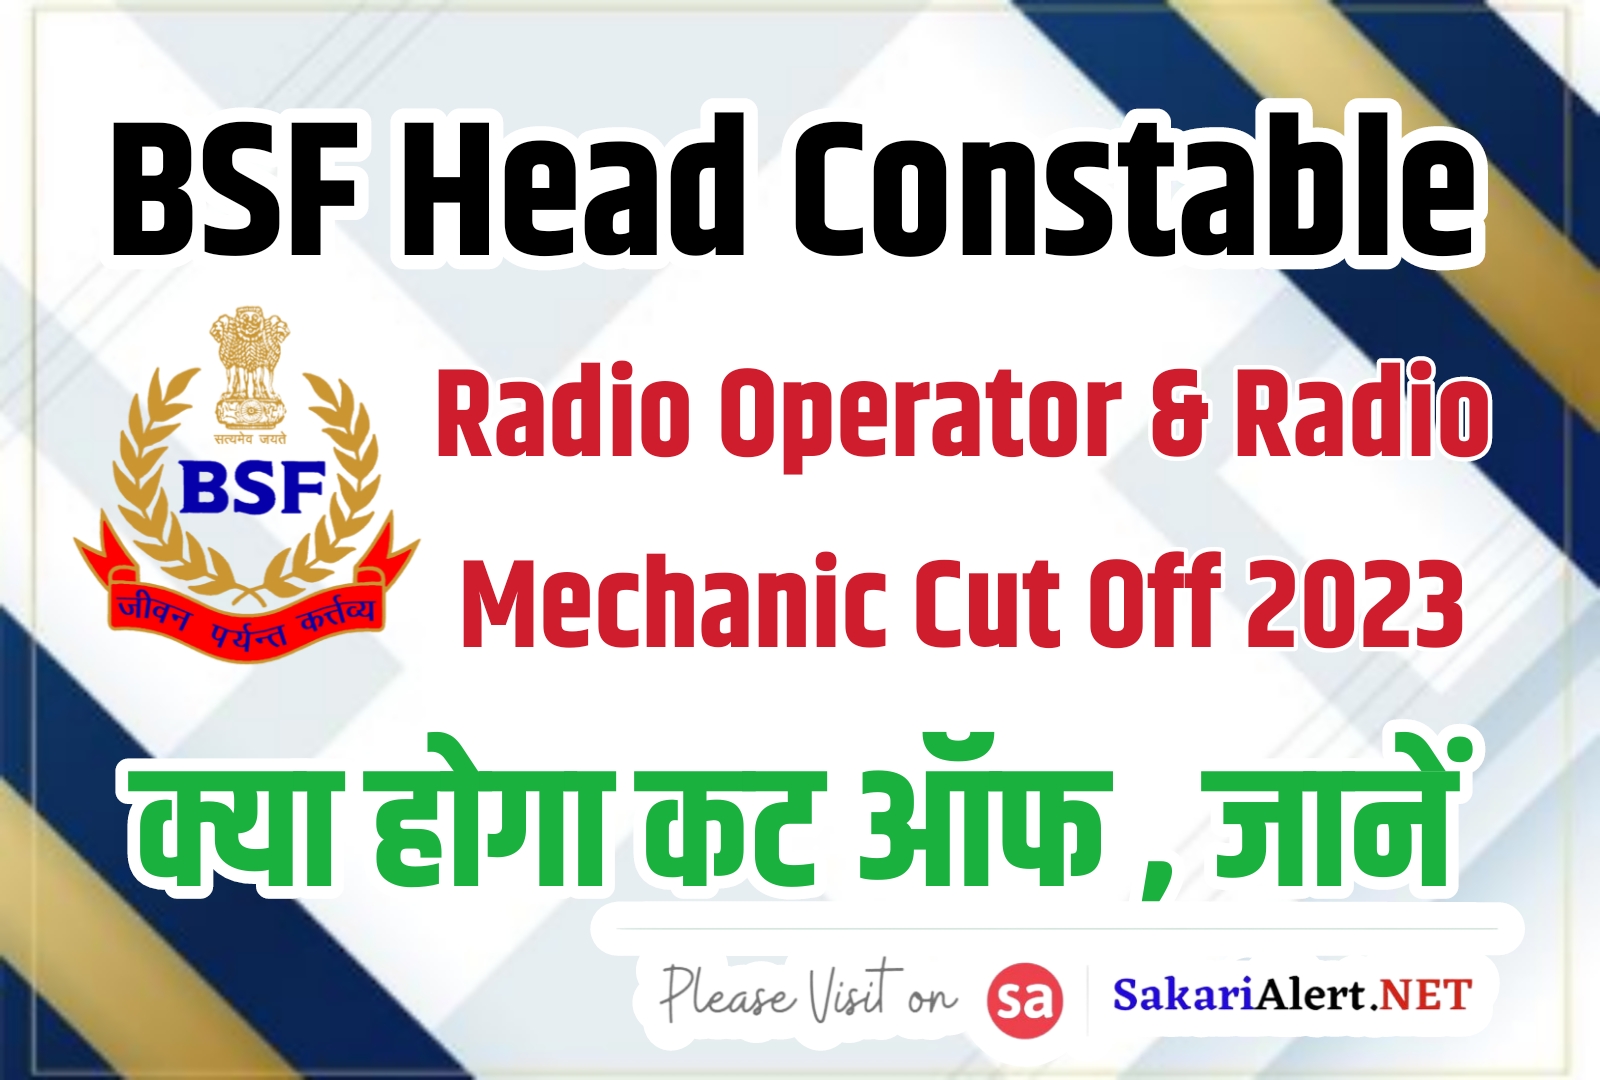 BSF Head Constable RO RM Cut Off 2023 